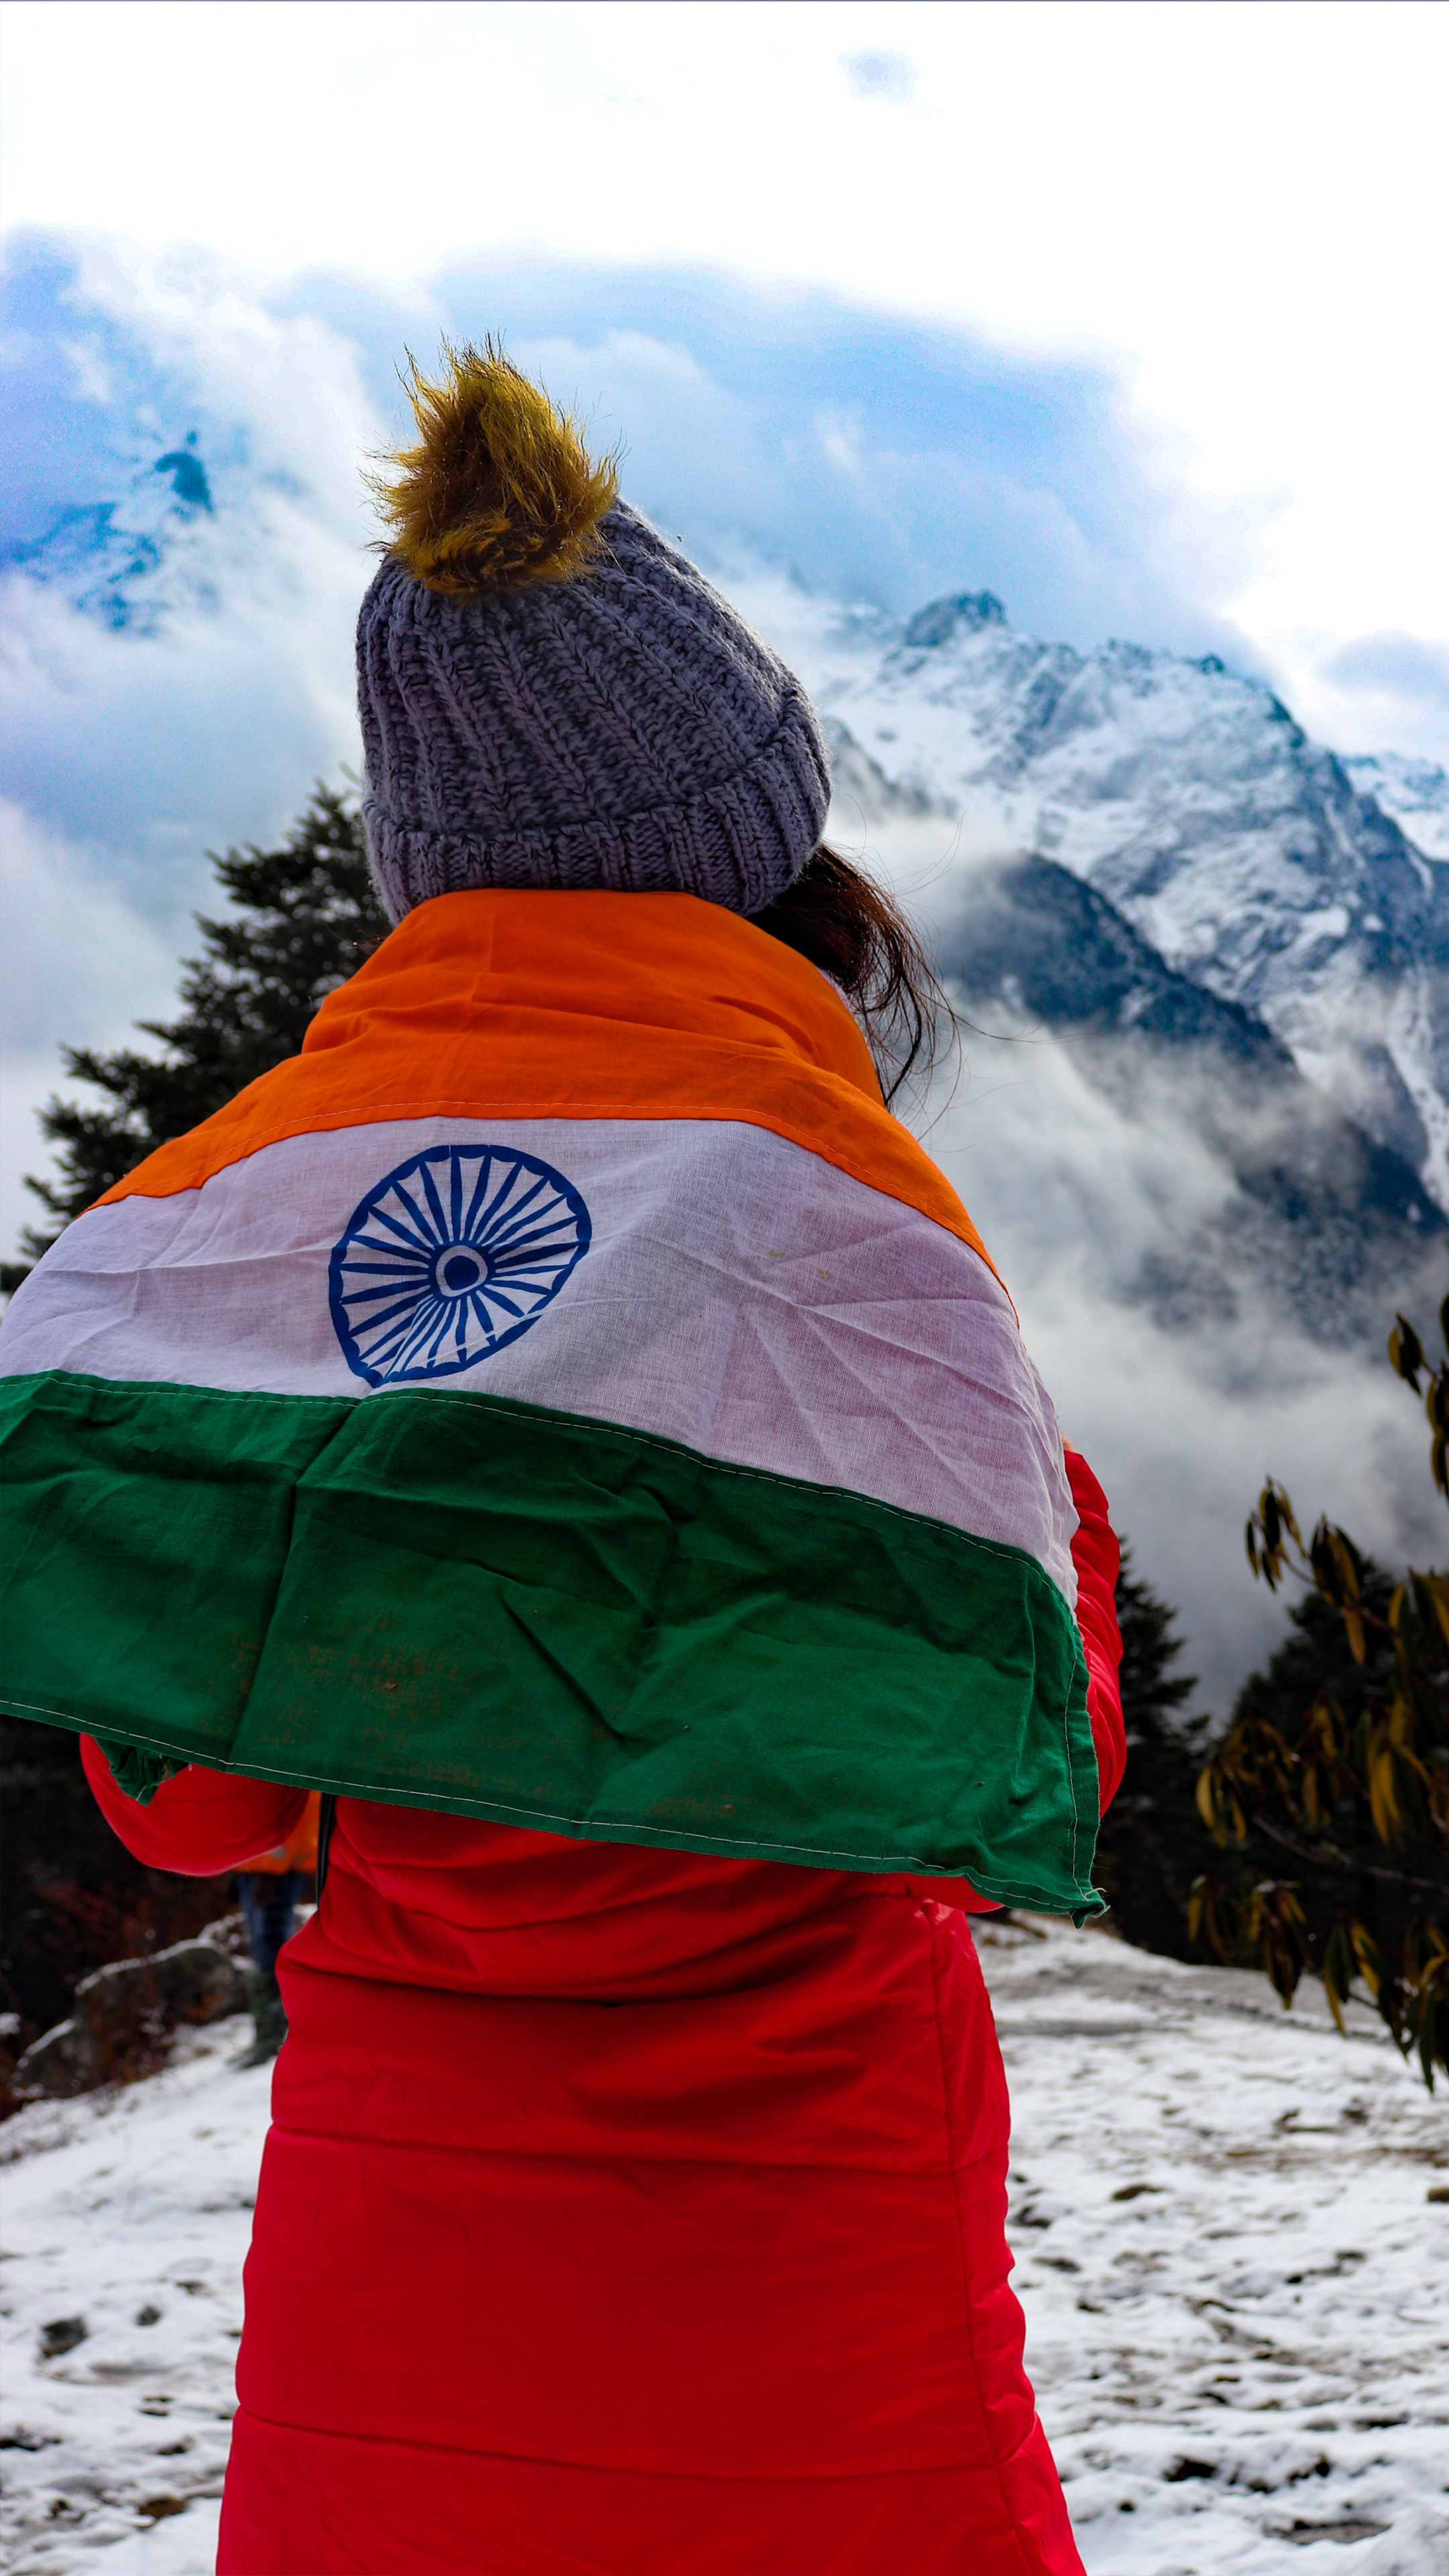 Girl Indian Flag Snow Mountains 4K Ultra HD Mobile Wallpaper